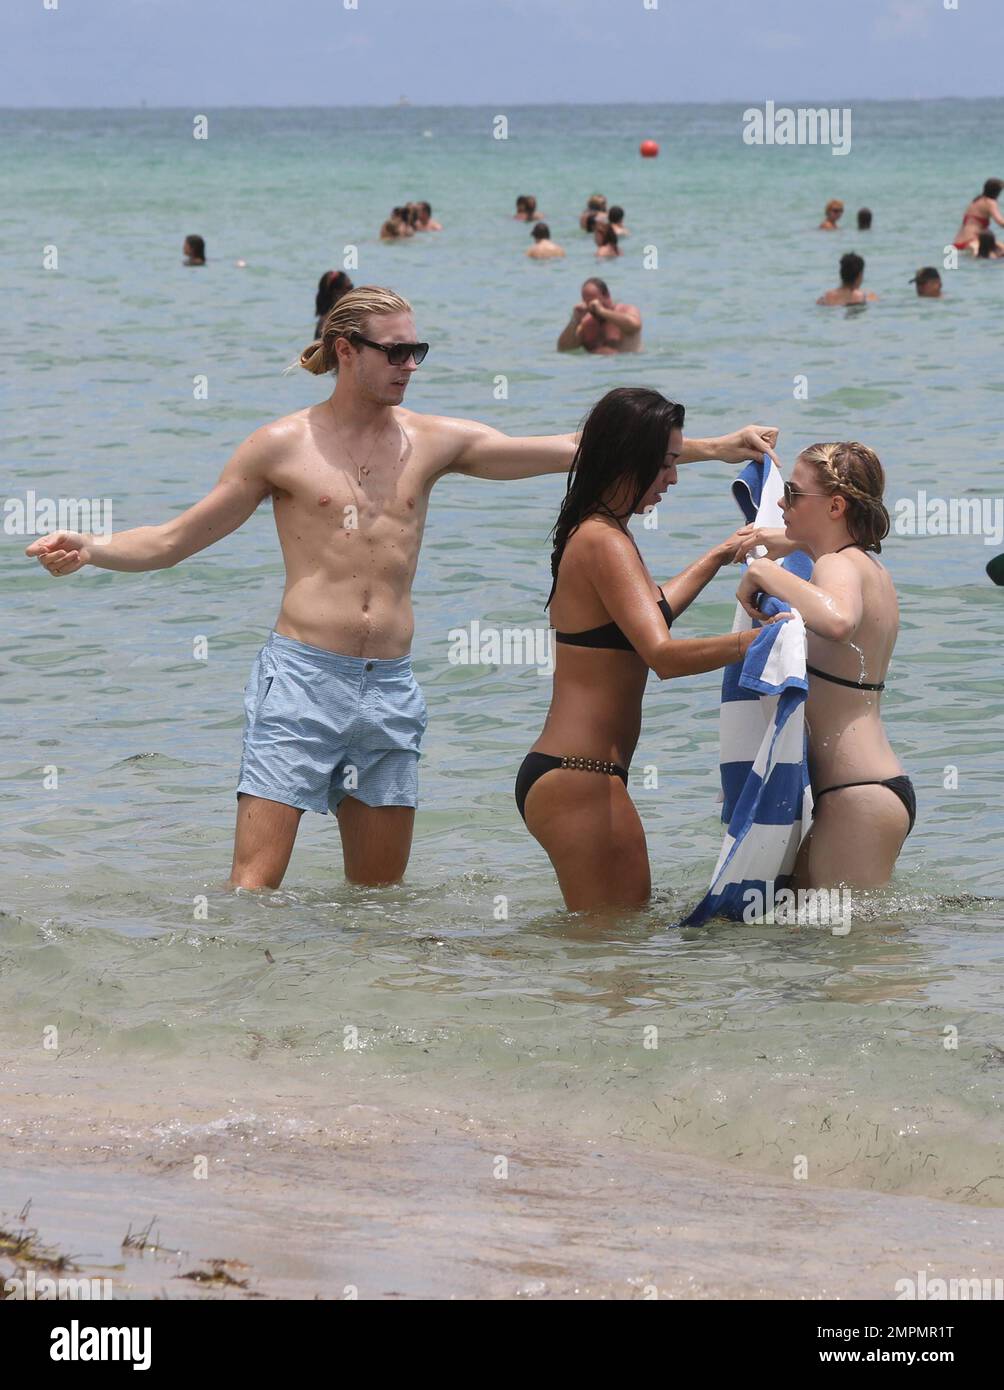 Brooklyn Beckham Posts Bikini-Clad Snap of Girlfriend Chloe Moretz